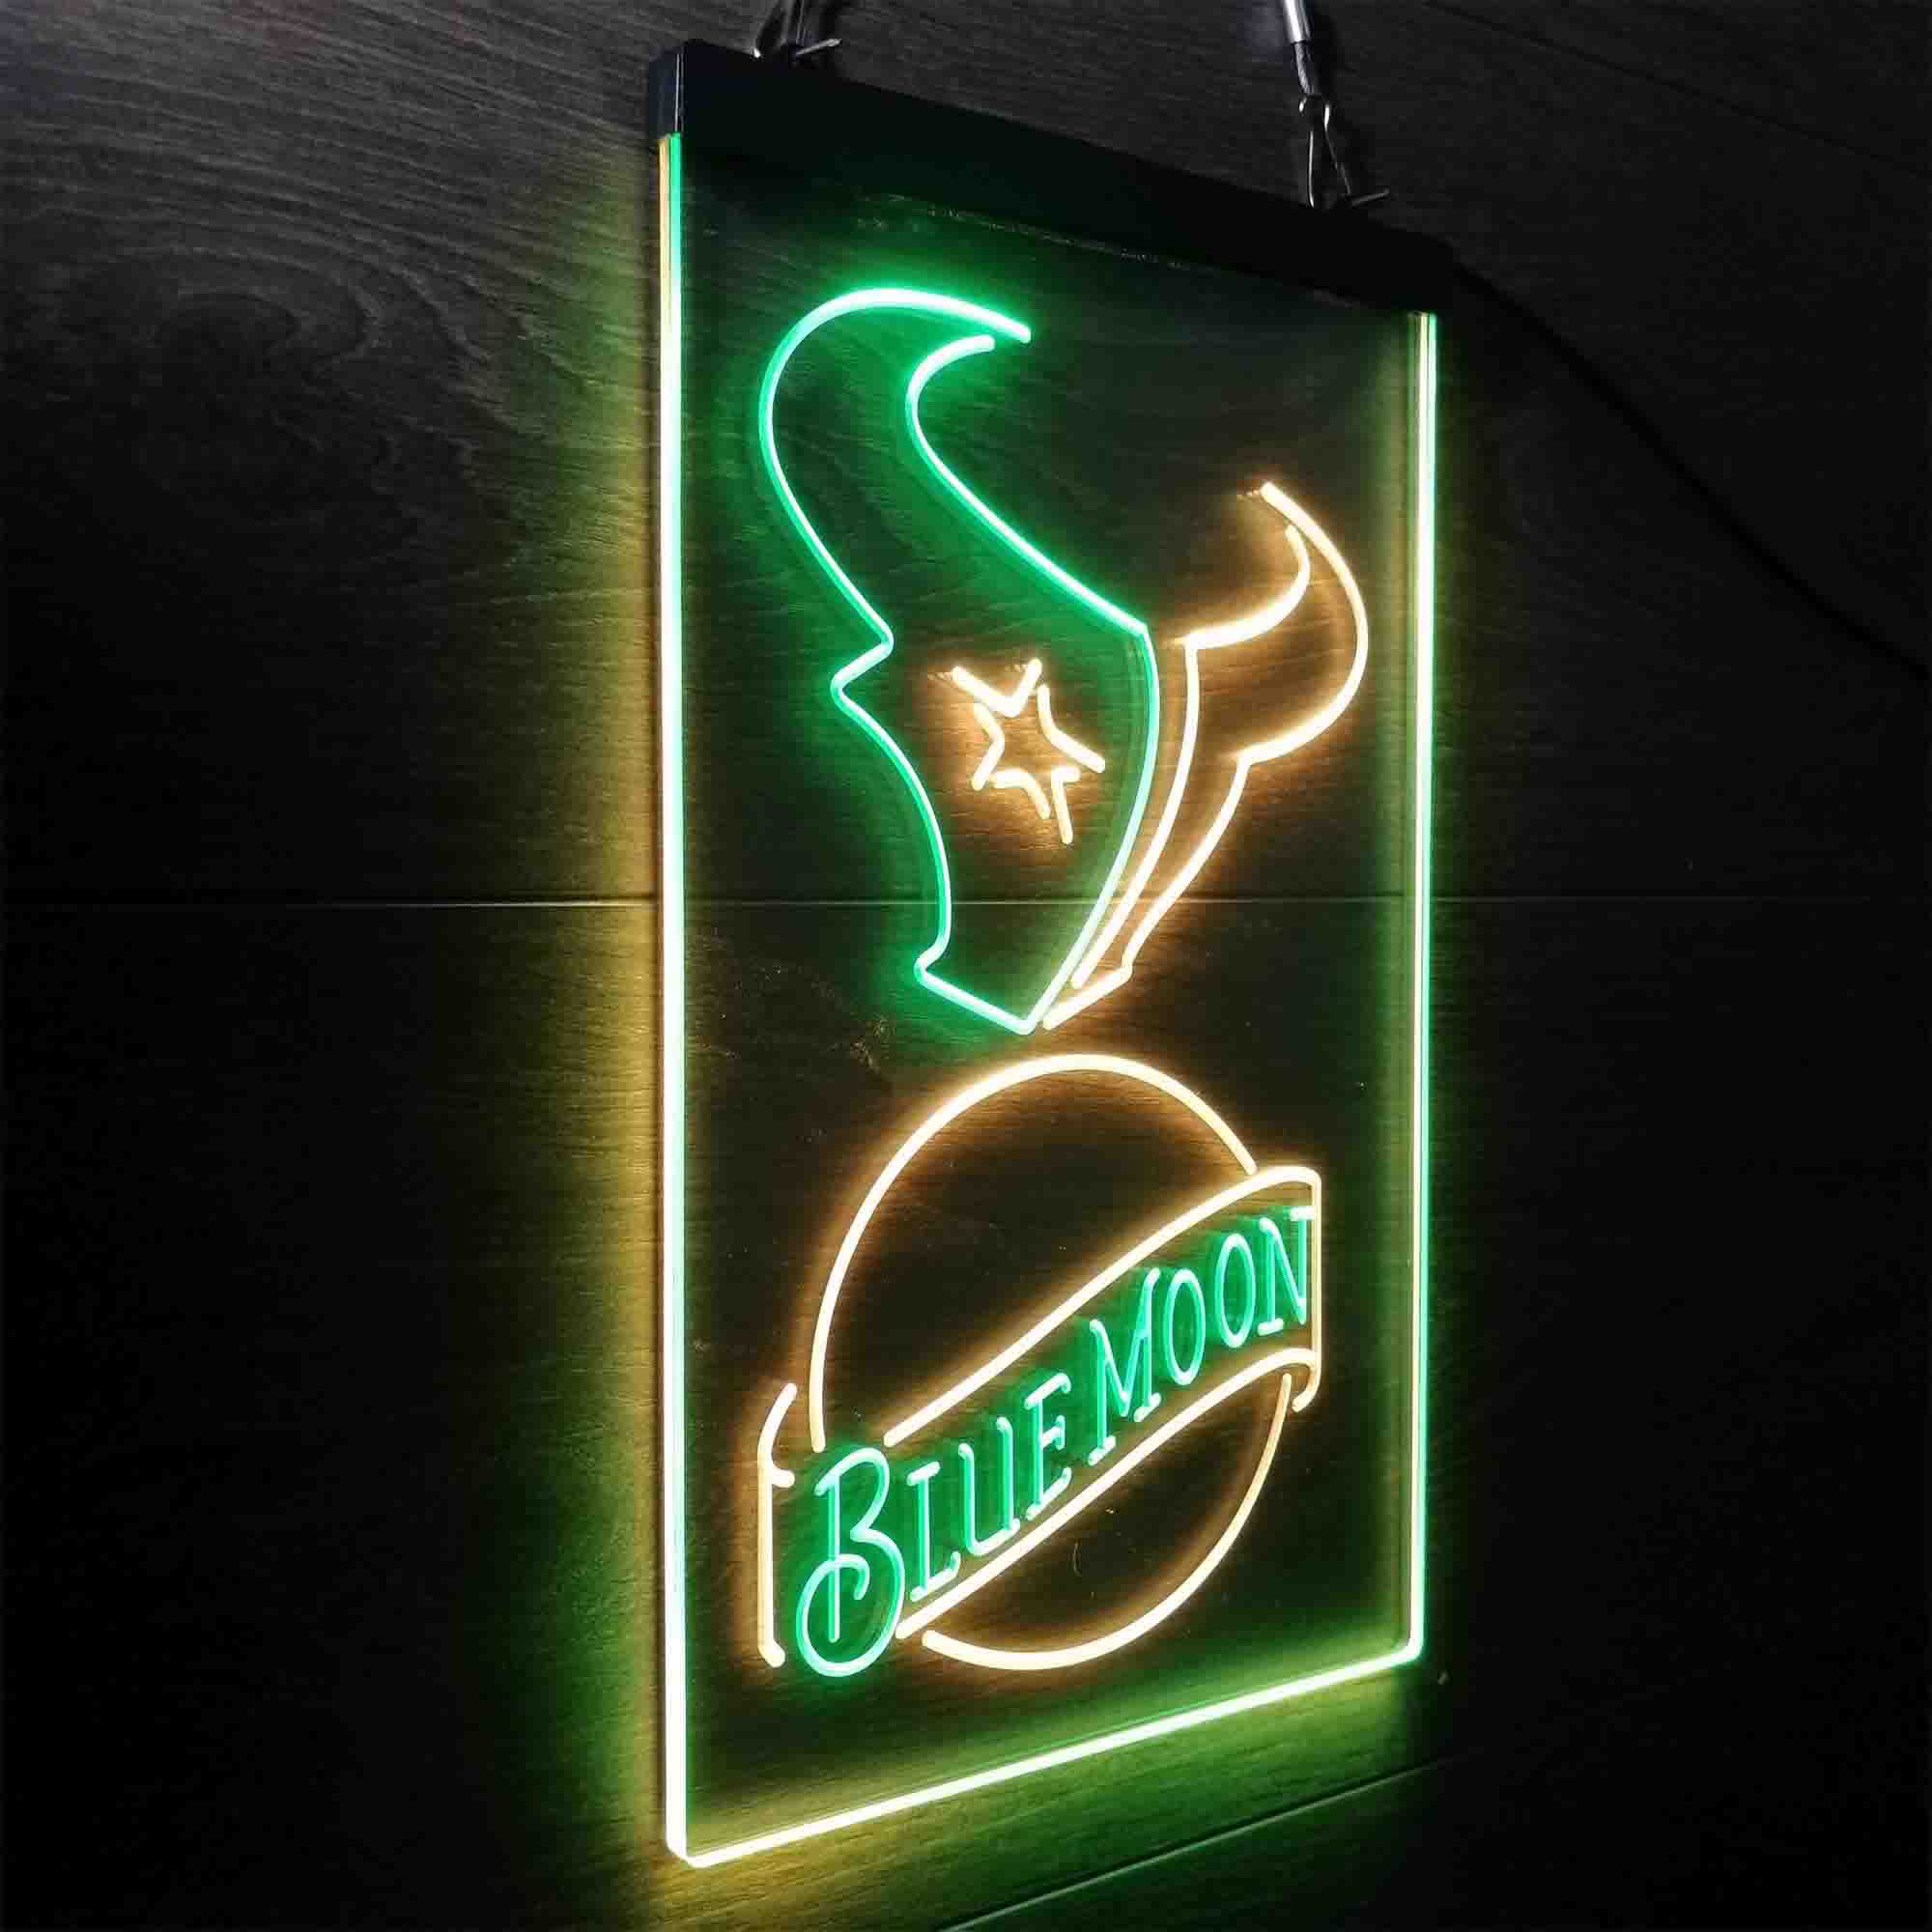 Blue Moon Bar Houston Texans Est. 2002 LED Neon Sign